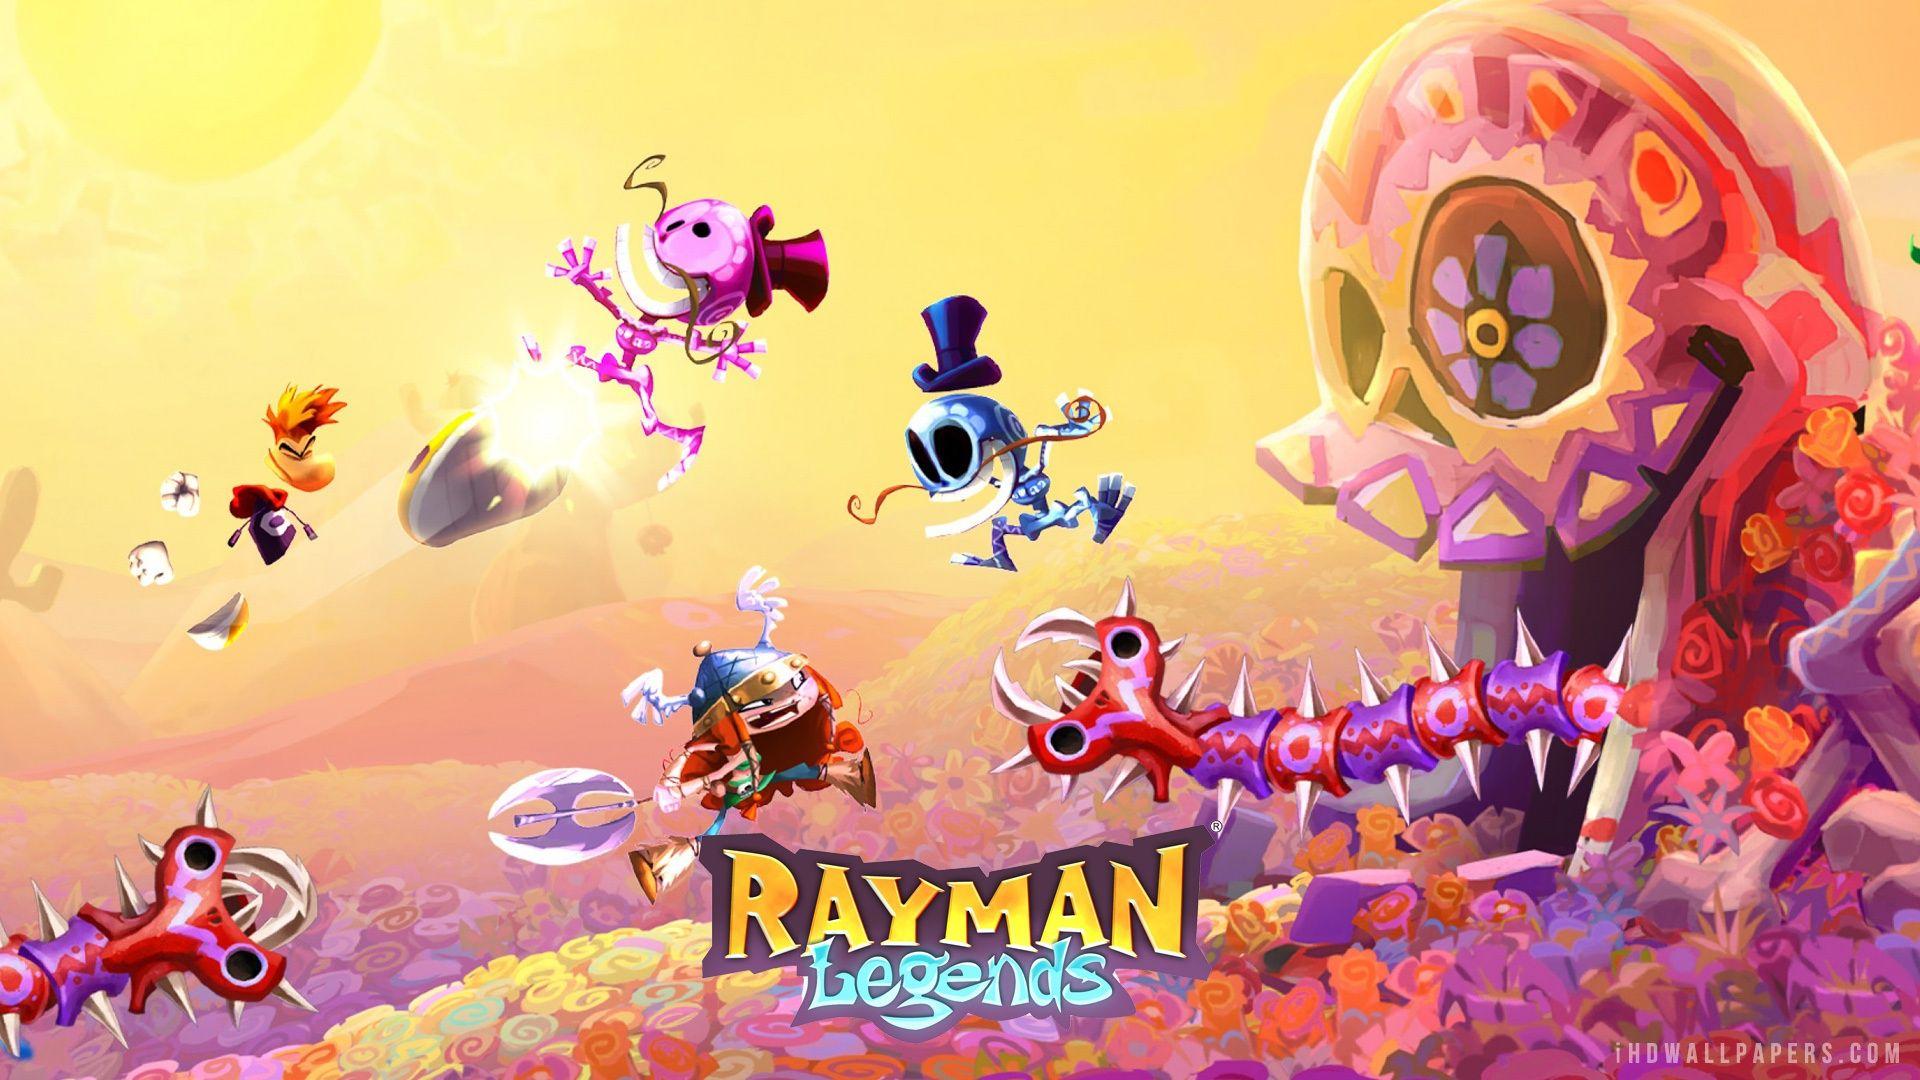 Rayman Legends Wallpaper, HDQ Beautiful Rayman Legends Image